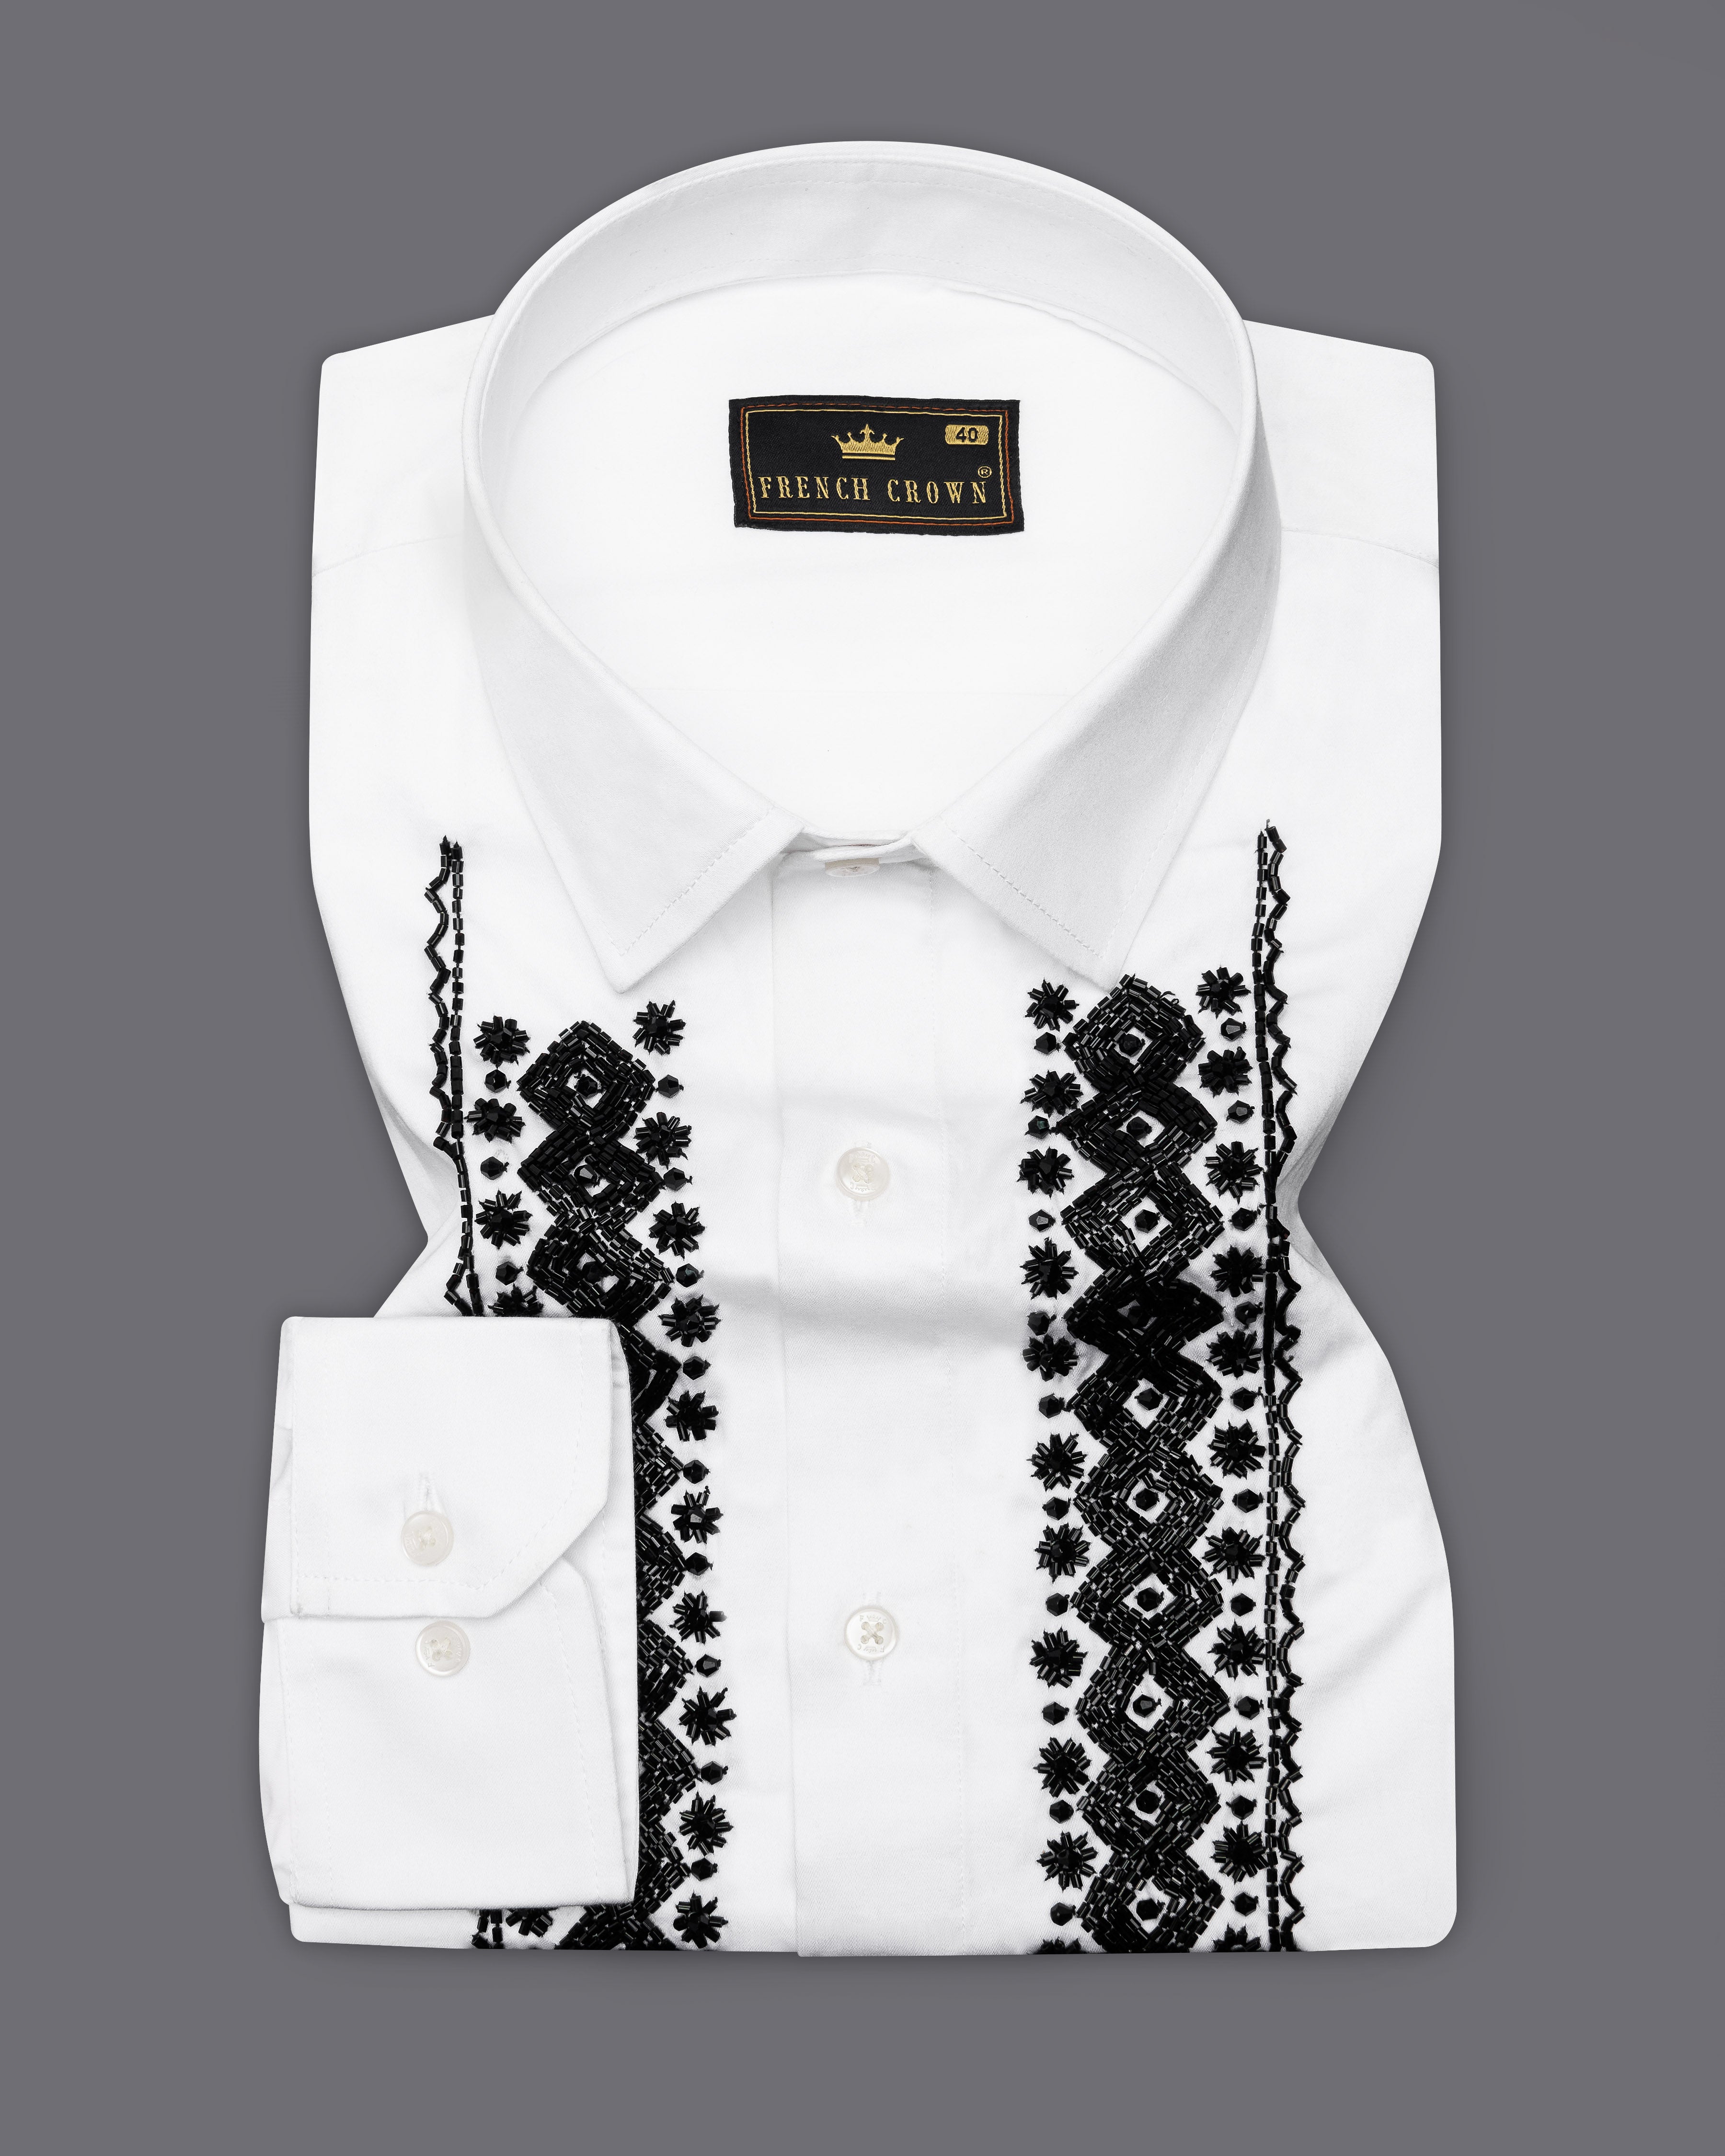 Bright White With Artisanal Aari Embroidery Super Soft Premium Cotton Designer Shirt 9800-E092-38, 9800-E092-H-38, 9800-E092-39, 9800-E092-H-39, 9800-E092-40, 9800-E092-H-40, 9800-E092-42, 9800-E092-H-42, 9800-E092-44, 9800-E092-H-44, 9800-E092-46, 9800-E092-H-46, 9800-E092-48, 9800-E092-H-48, 9800-E092-50, 9800-E092-H-50, 9800-E092-52, 9800-E092-H-52